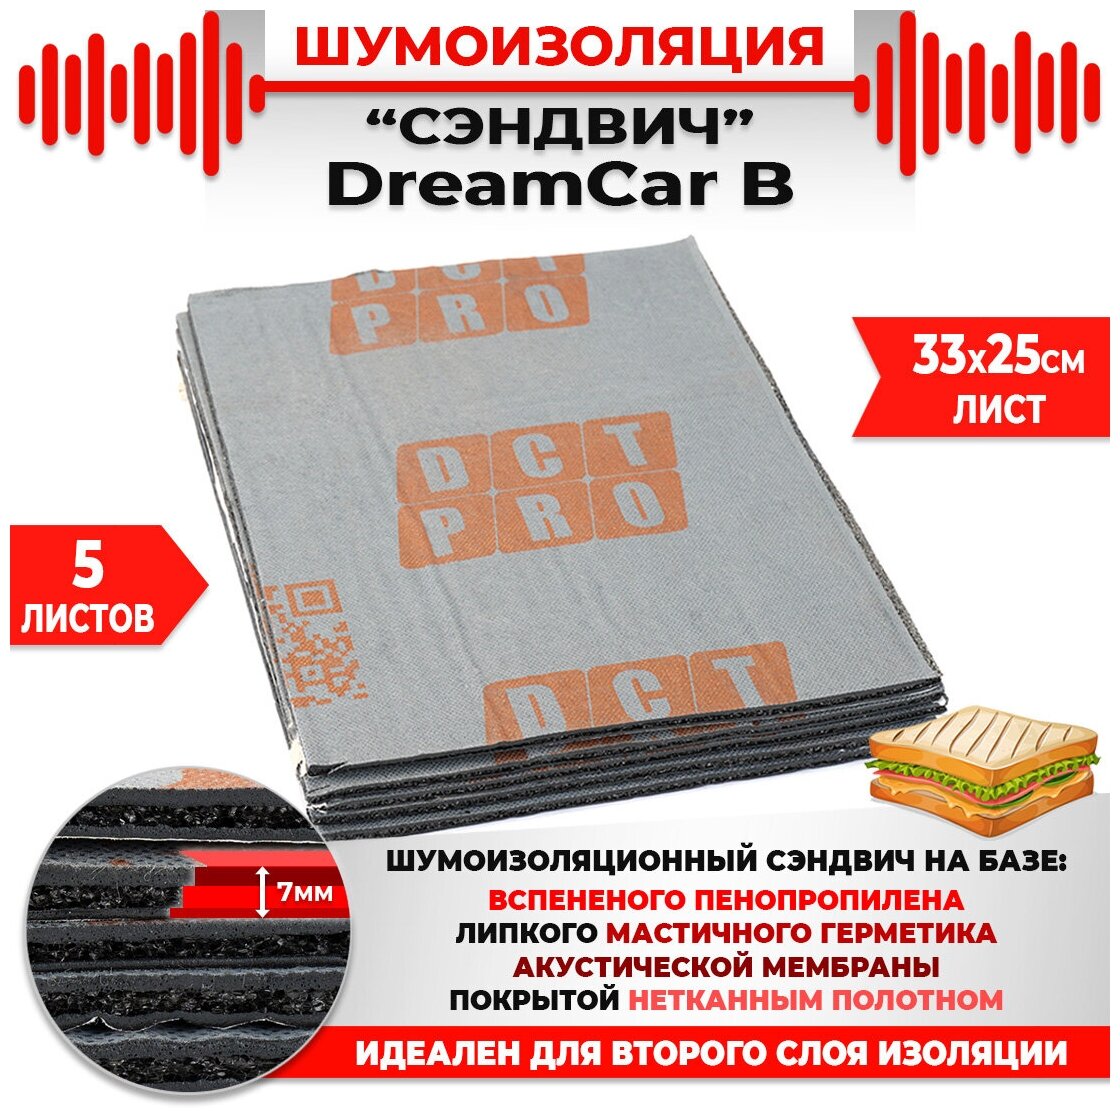 DreamCar Technology 5шт. Шумомоизоляция сэндвич Быстрого монтажа DreamCar B 33х25см 7мм 5 листов